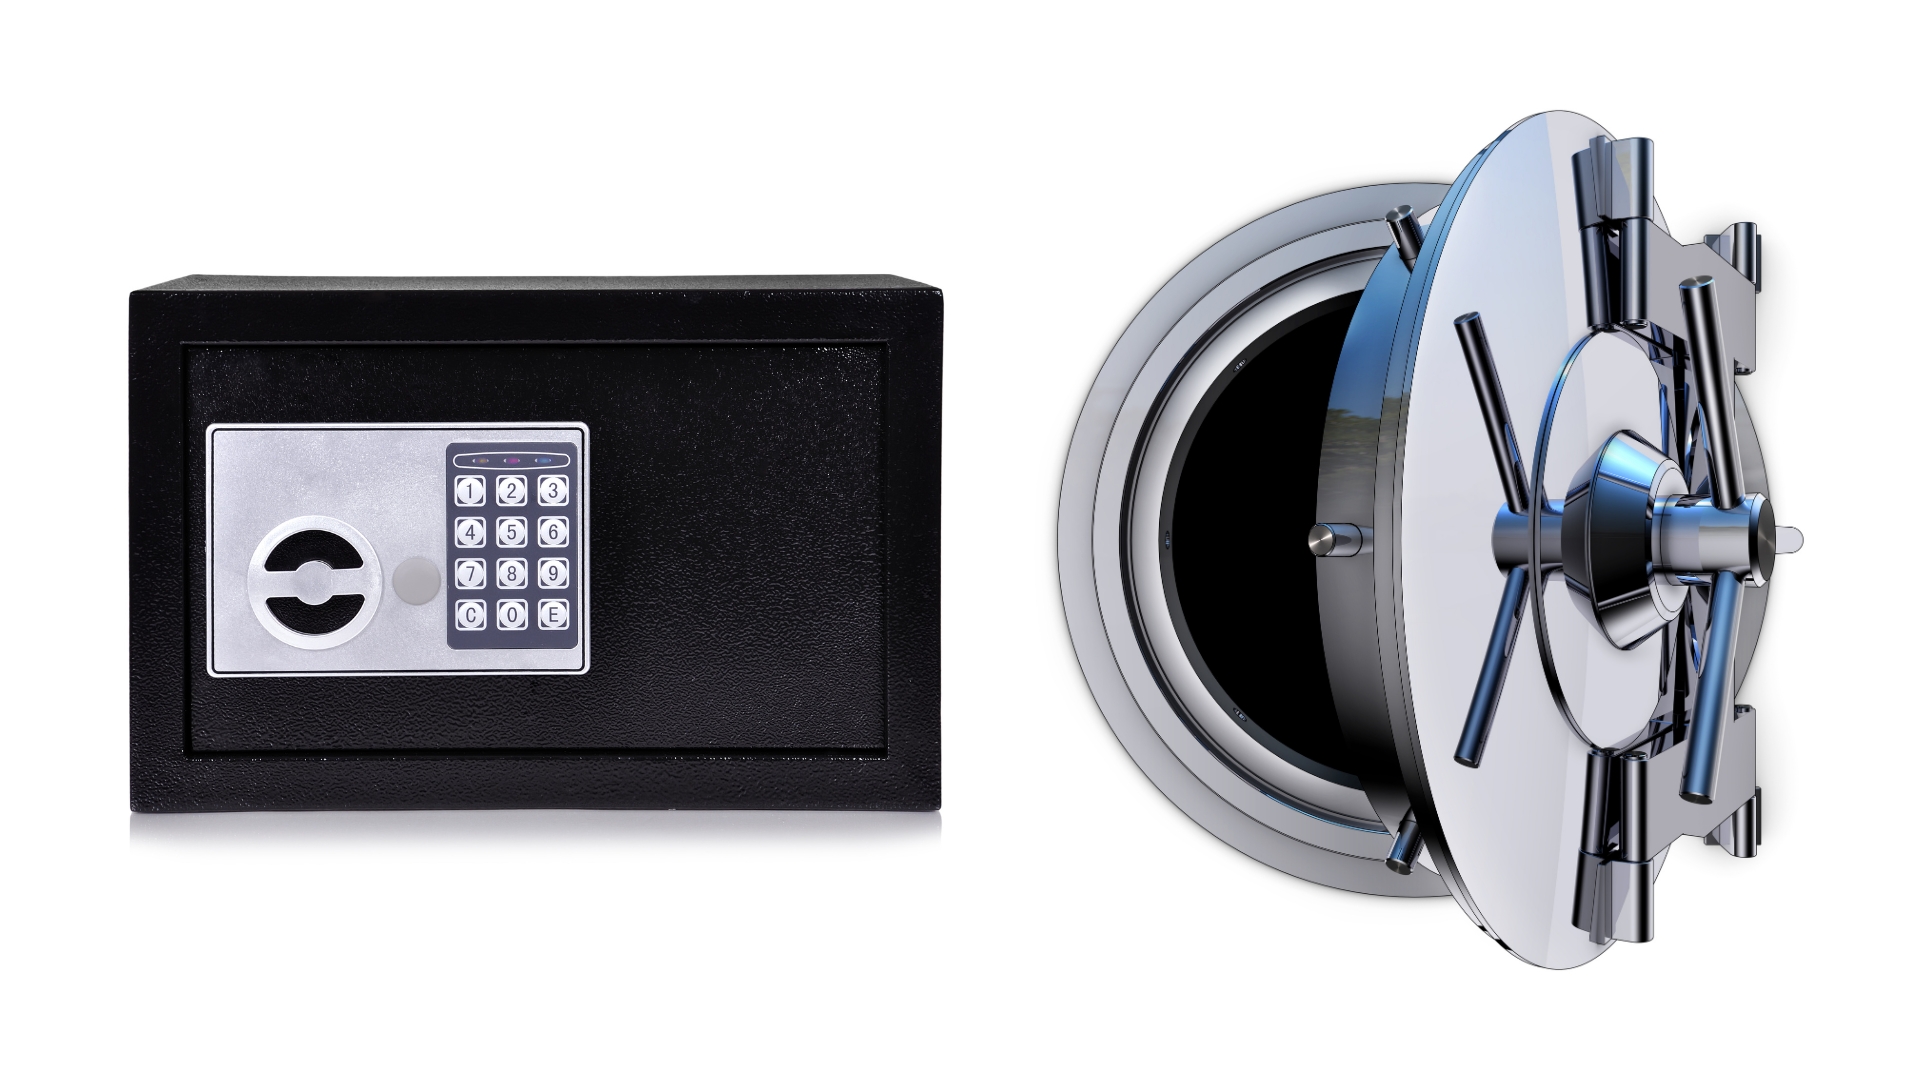 An image of a safe alongside an image of a vault